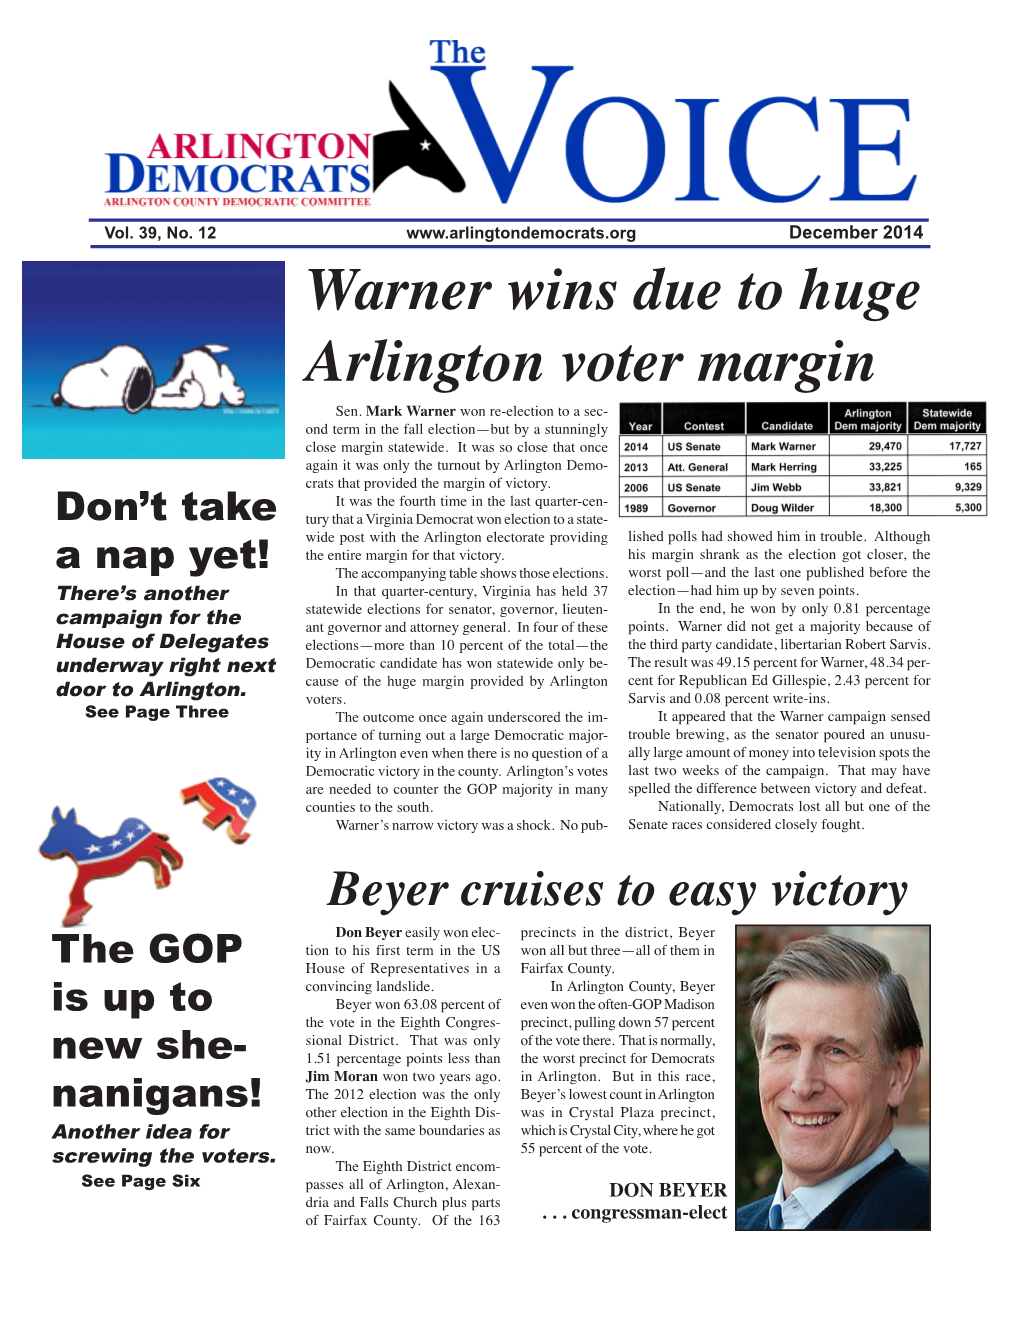 Warner Wins Due to Huge Arlington Voter Margin Sen